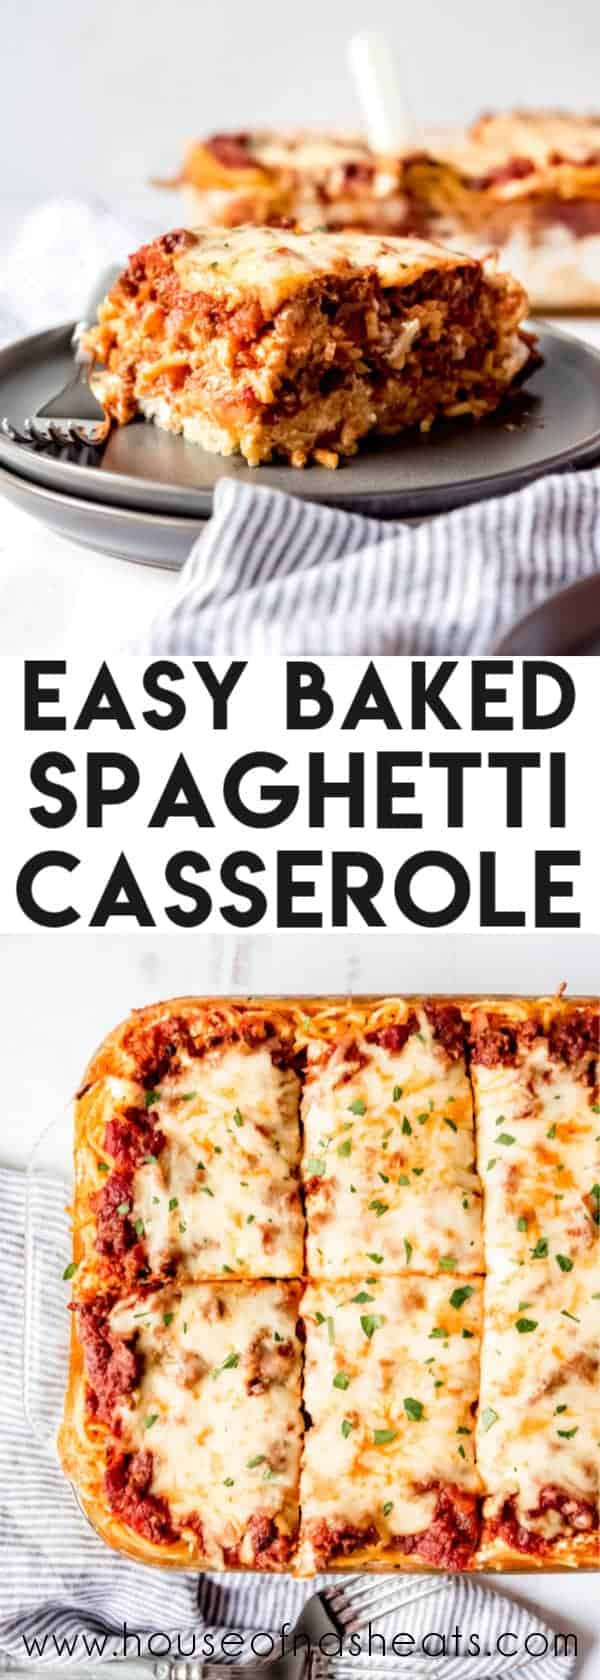 Easy baked spaghetti casserole